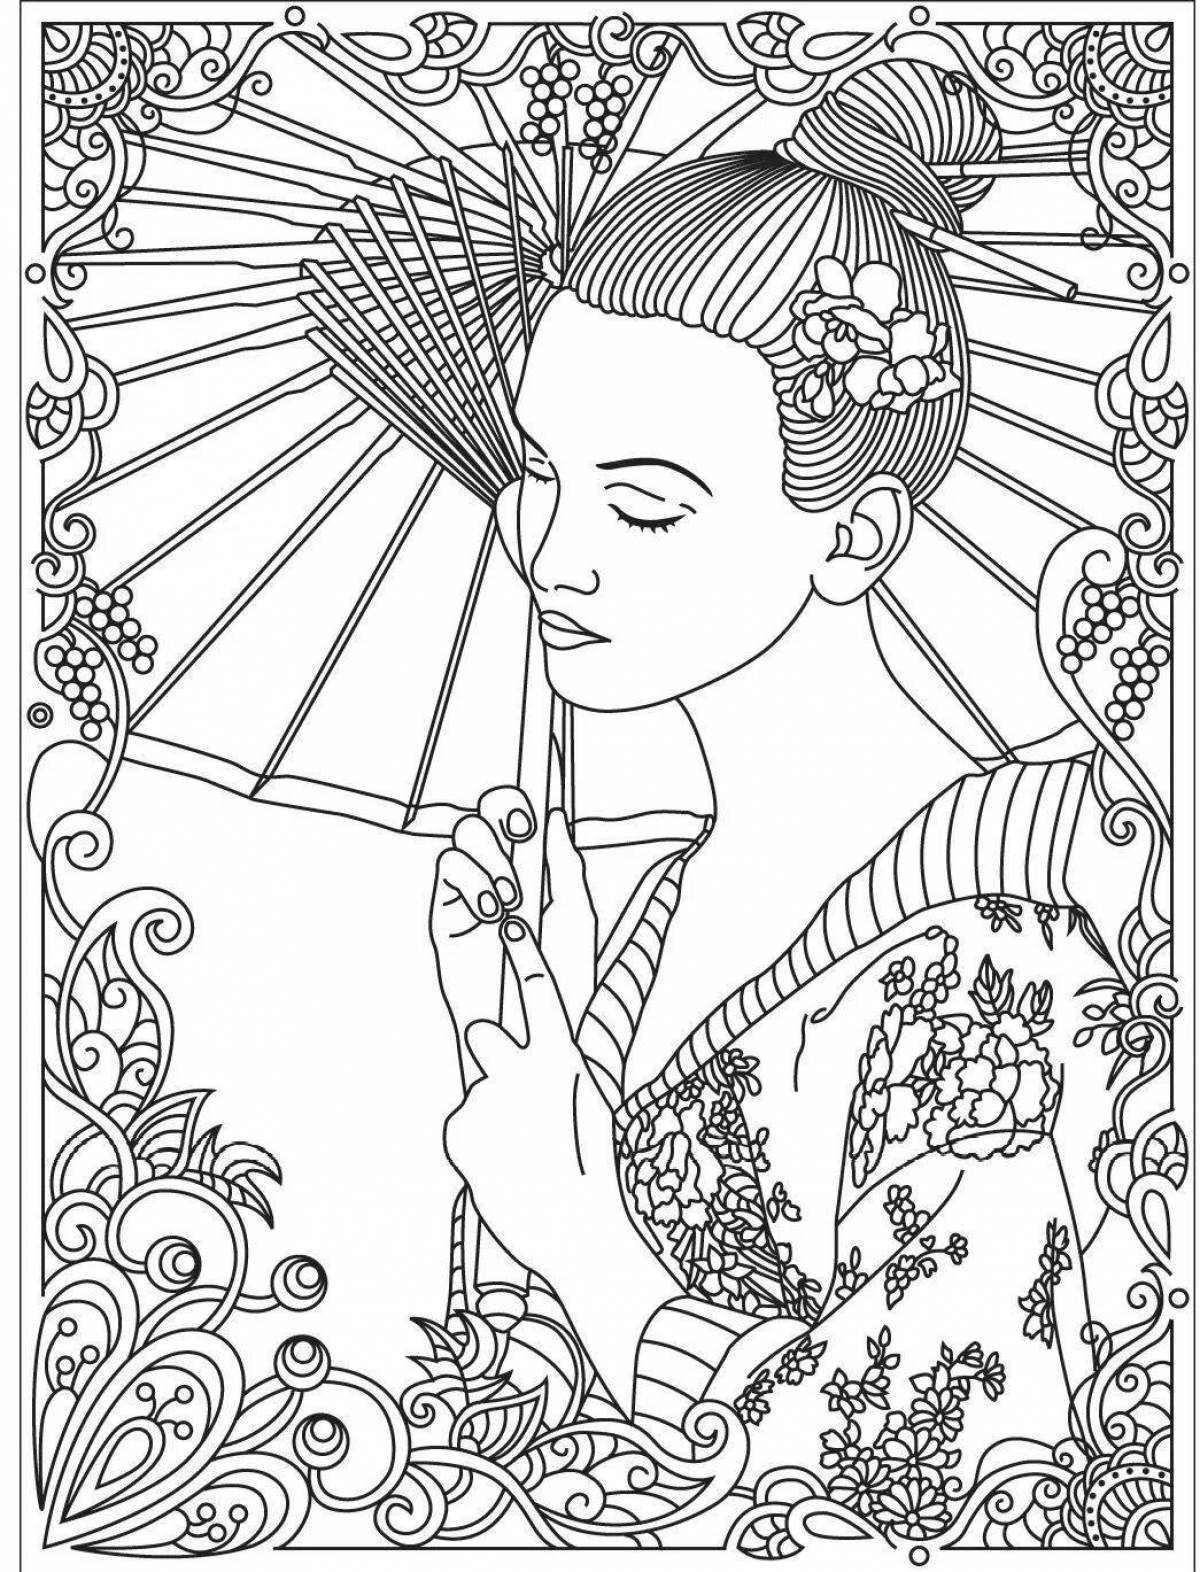 Adorable geisha coloring page